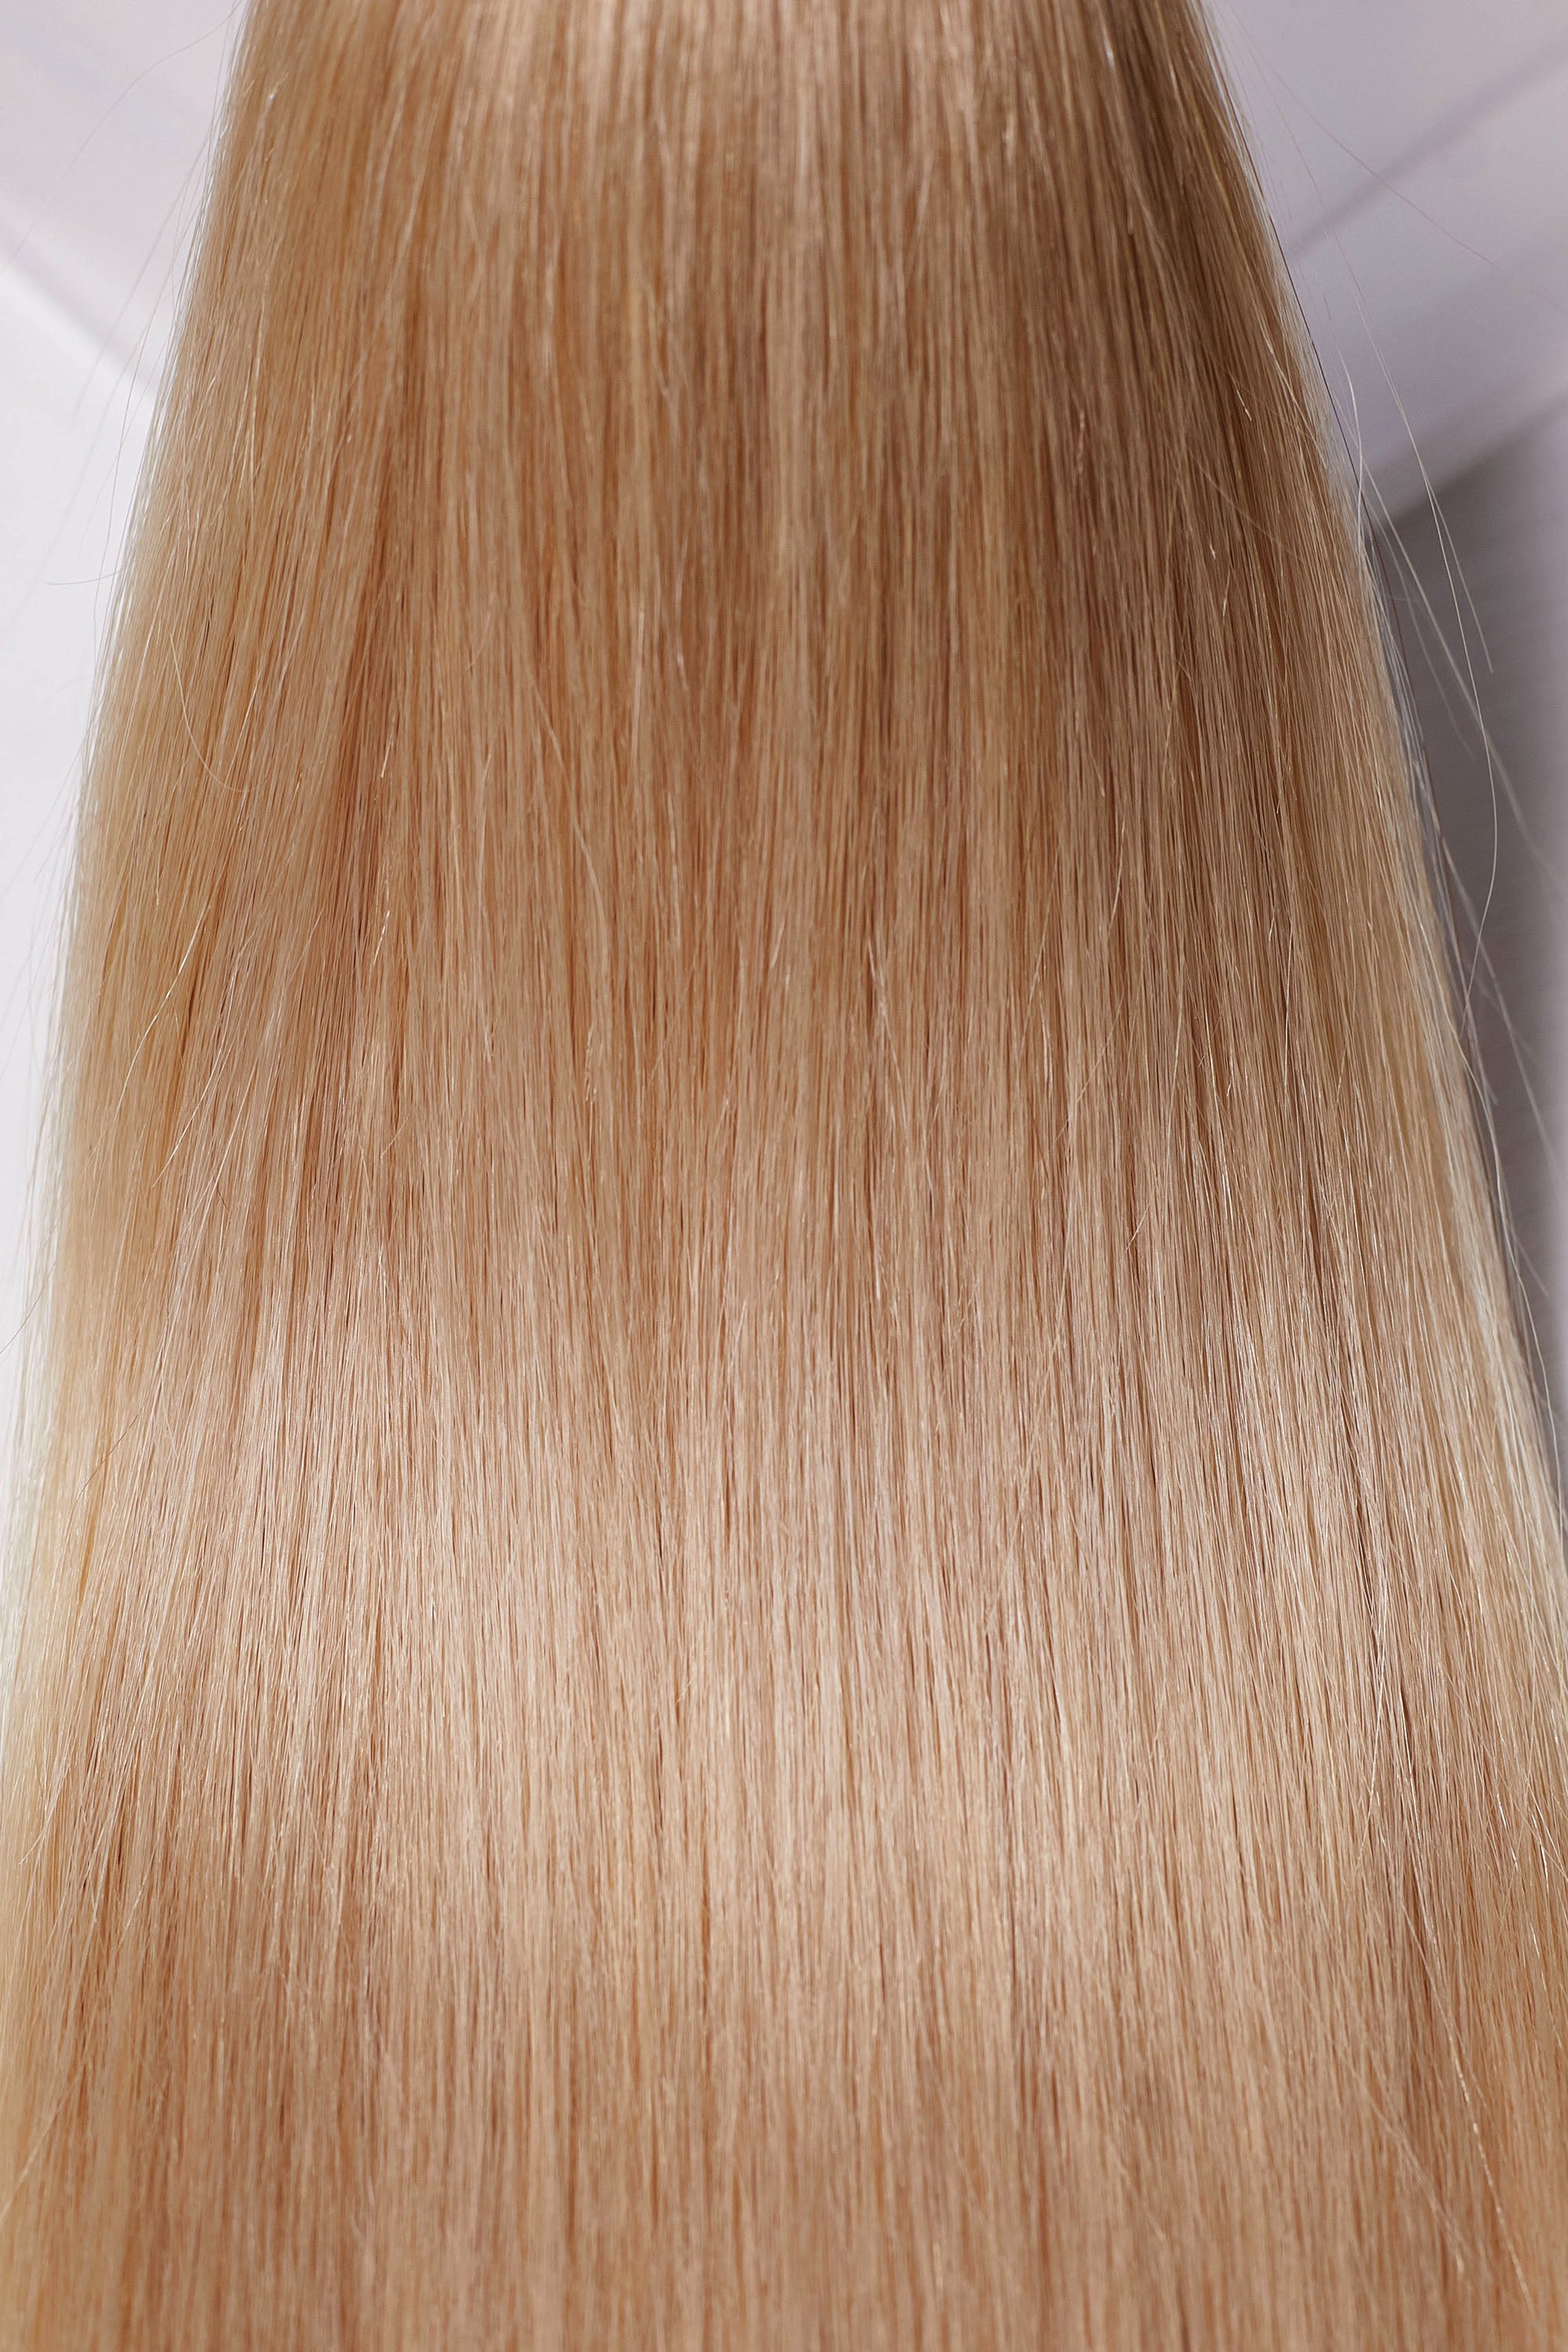 Behair professional Keratin Tip "Premium" 22" (55cm) Natural Straight Light Gold Sand #16 - 25g (Micro - 0.5g each pcs) hair extensions